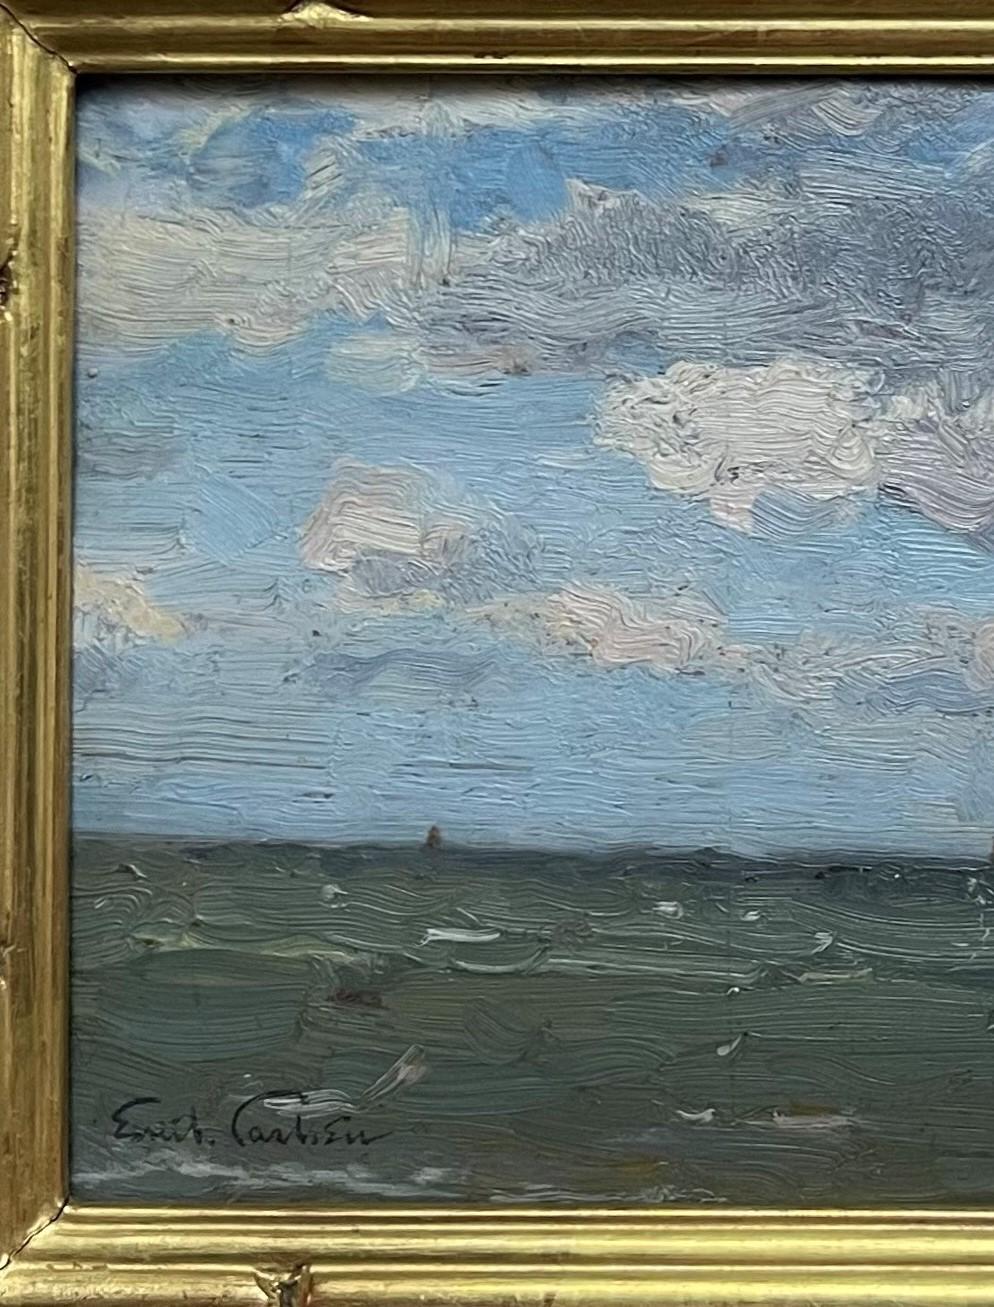   Emil Carlsen American Impressionist Seascape oil Painting Salmagundi Club For Sale 1